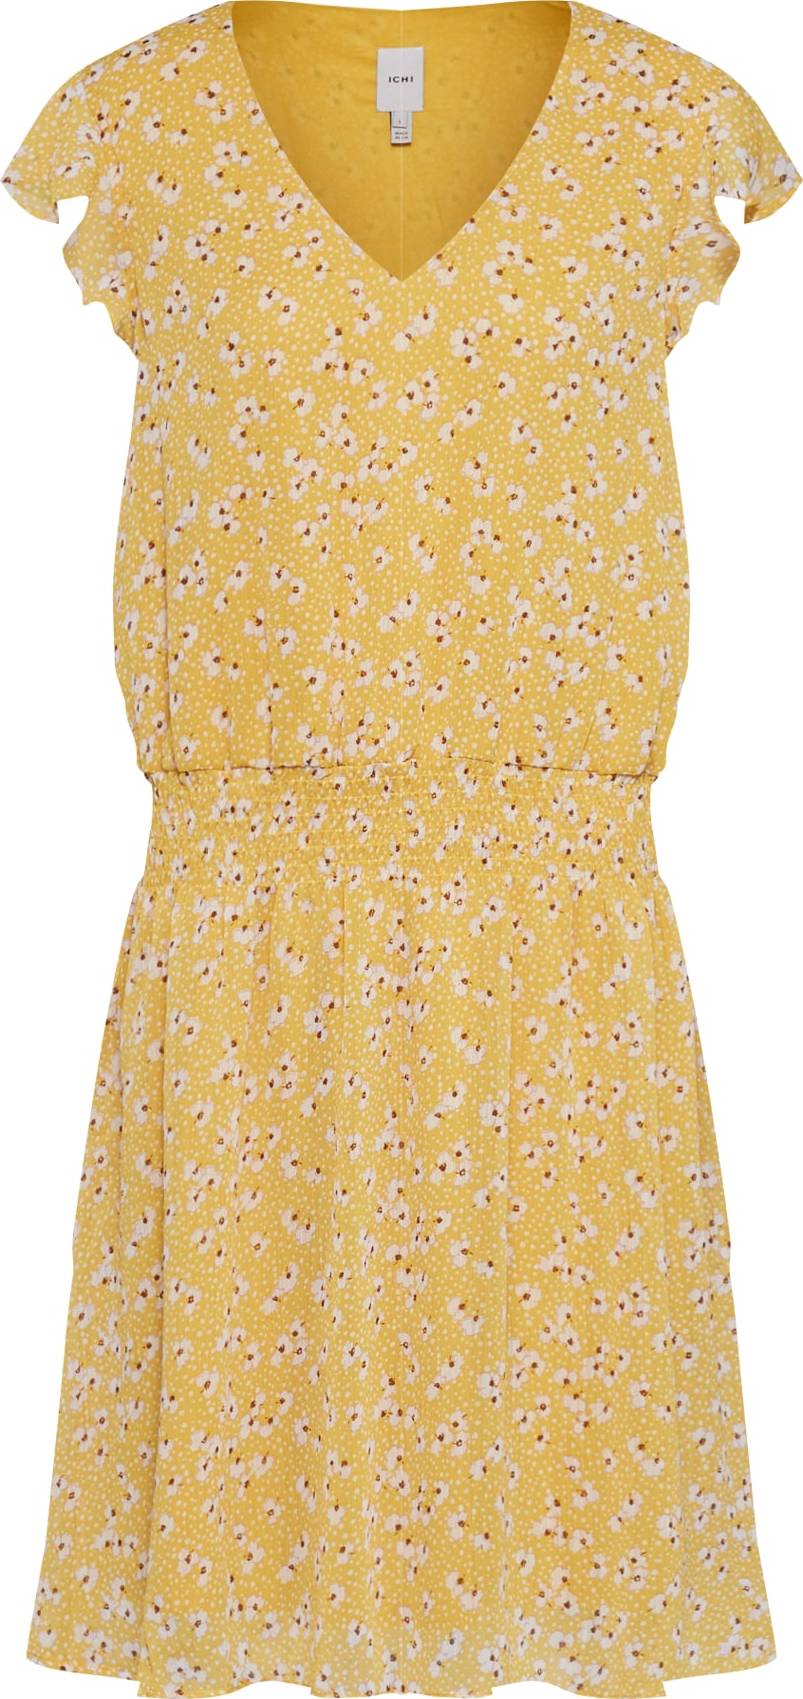 ICHI Letní šaty 'Ixeda' hnědá / žlutá / bílá